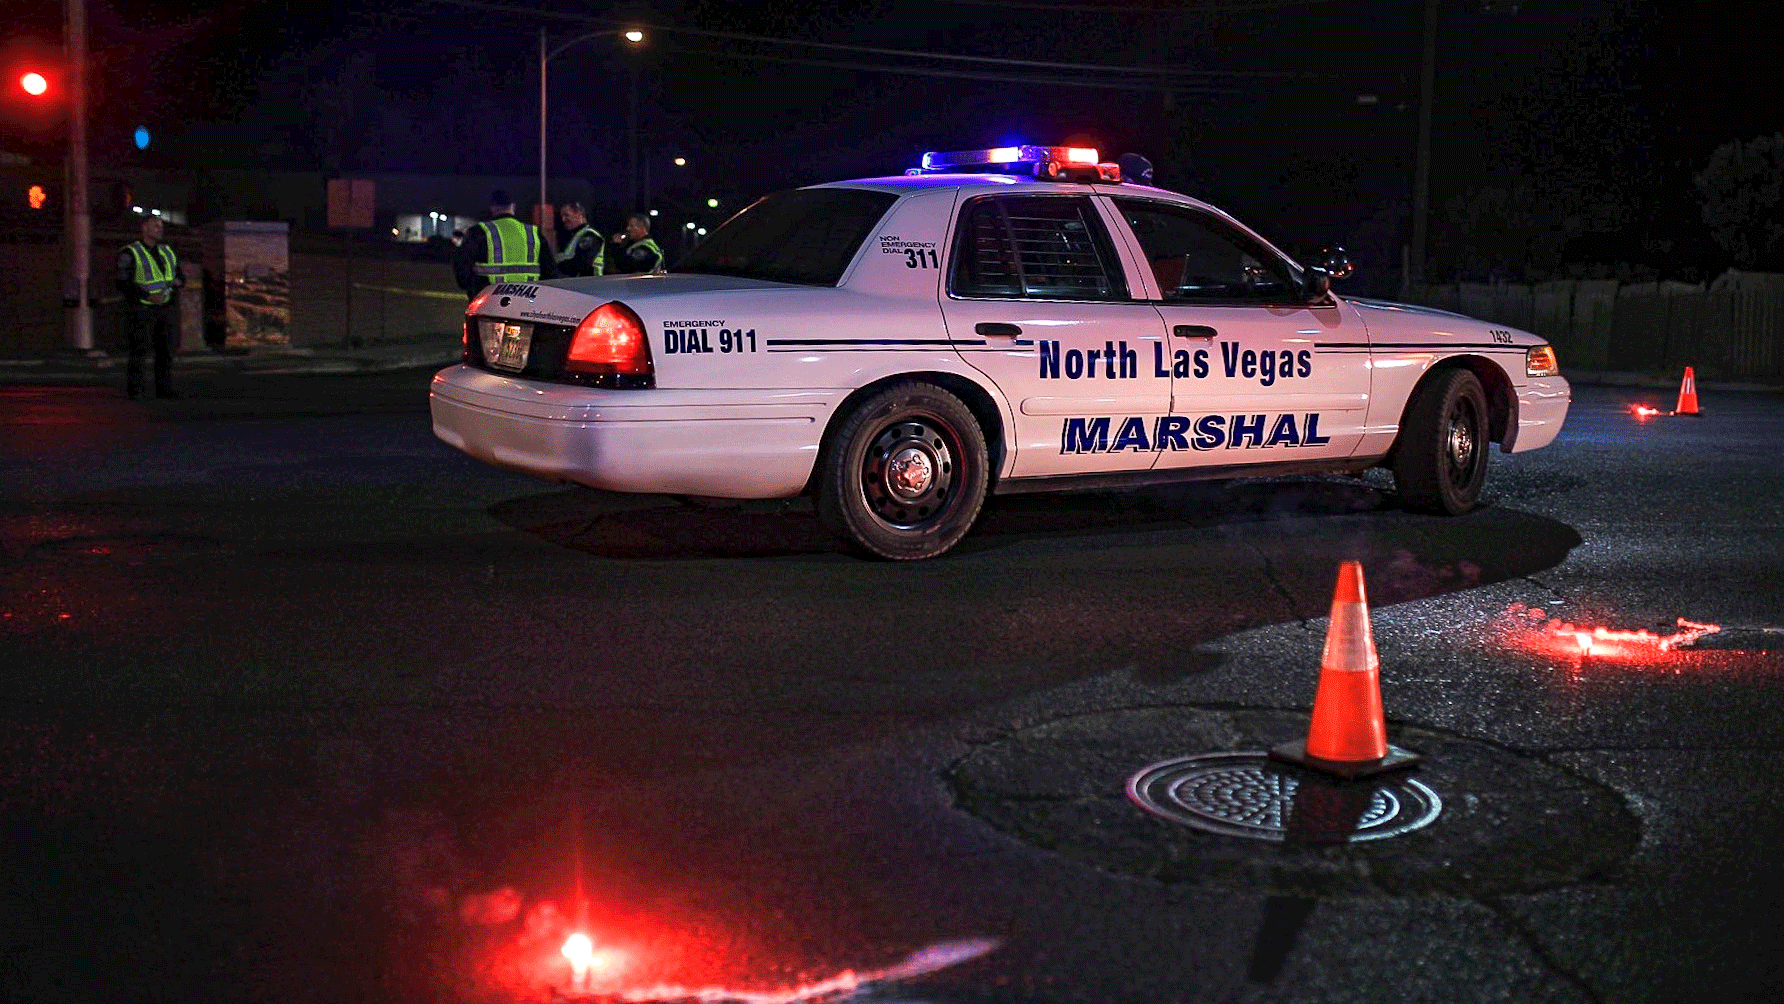 Woman struck and killed by vehicle in North Las Vegas - FOX5 Vegas - KVVU1784 x 1004